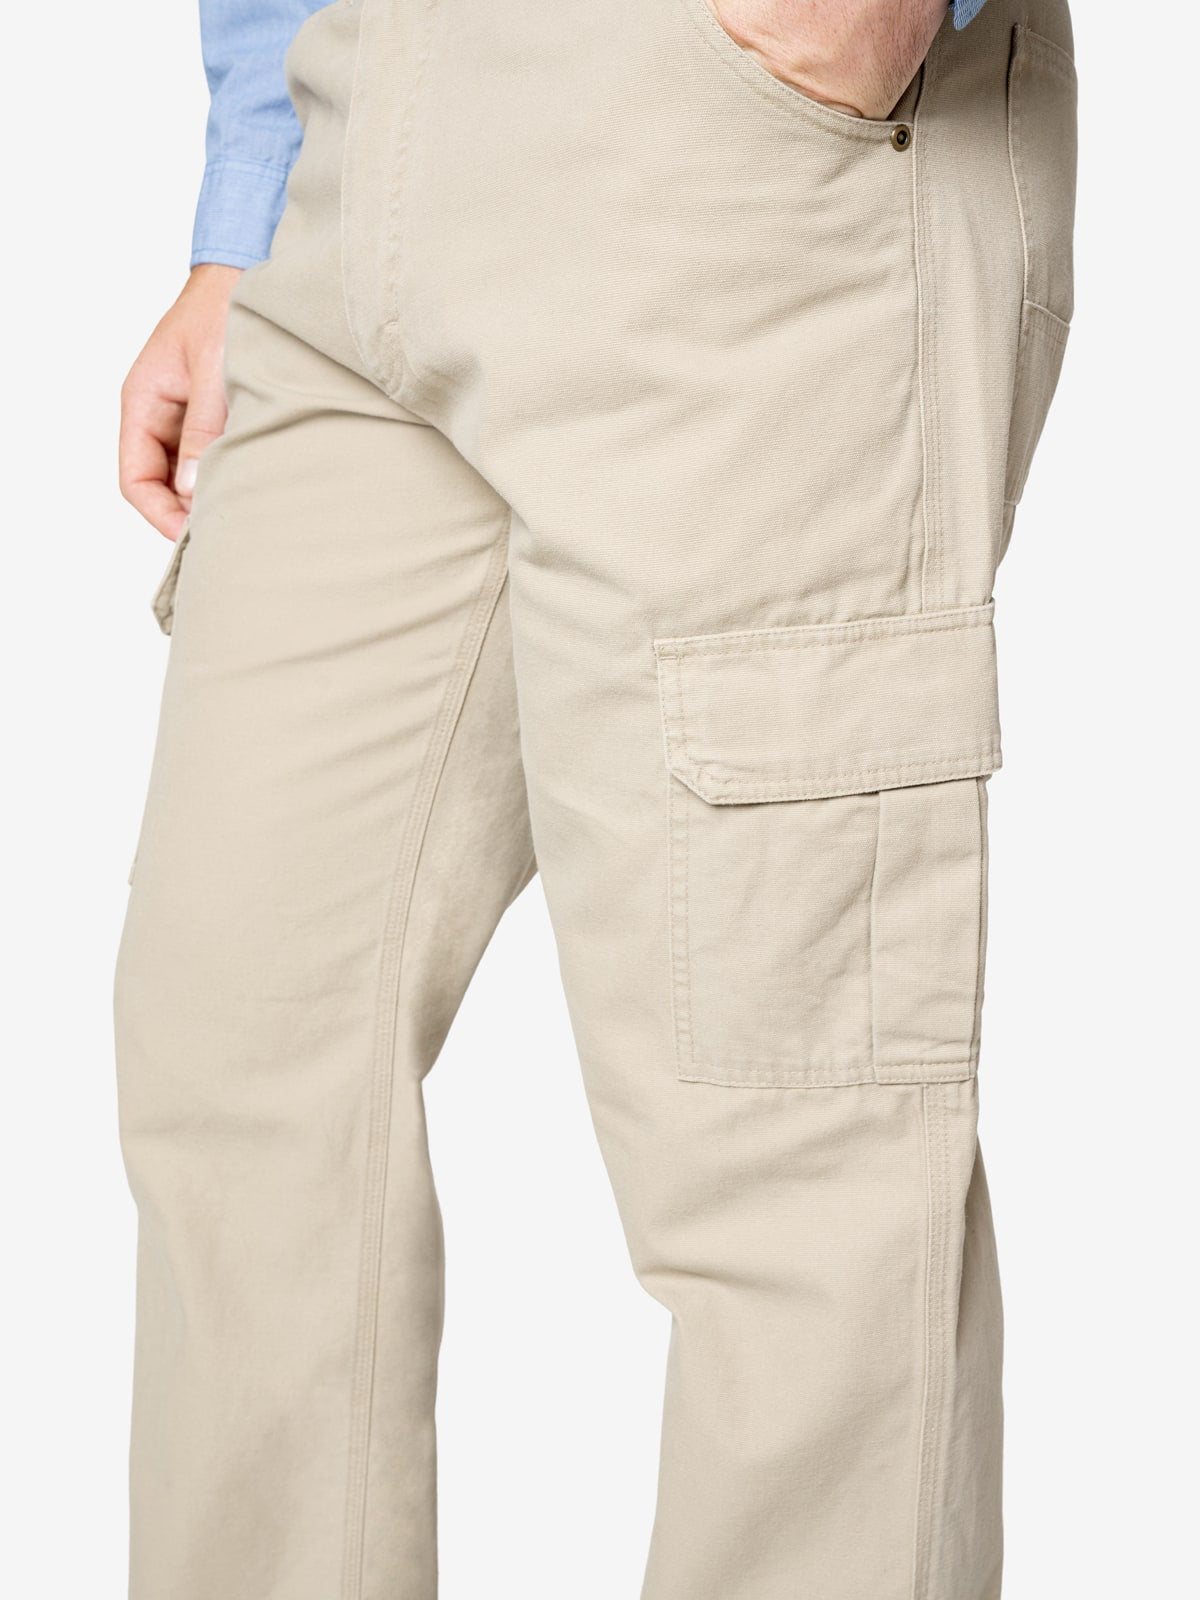 Men's Bug Repellent Cargo Pants – Insect Shield